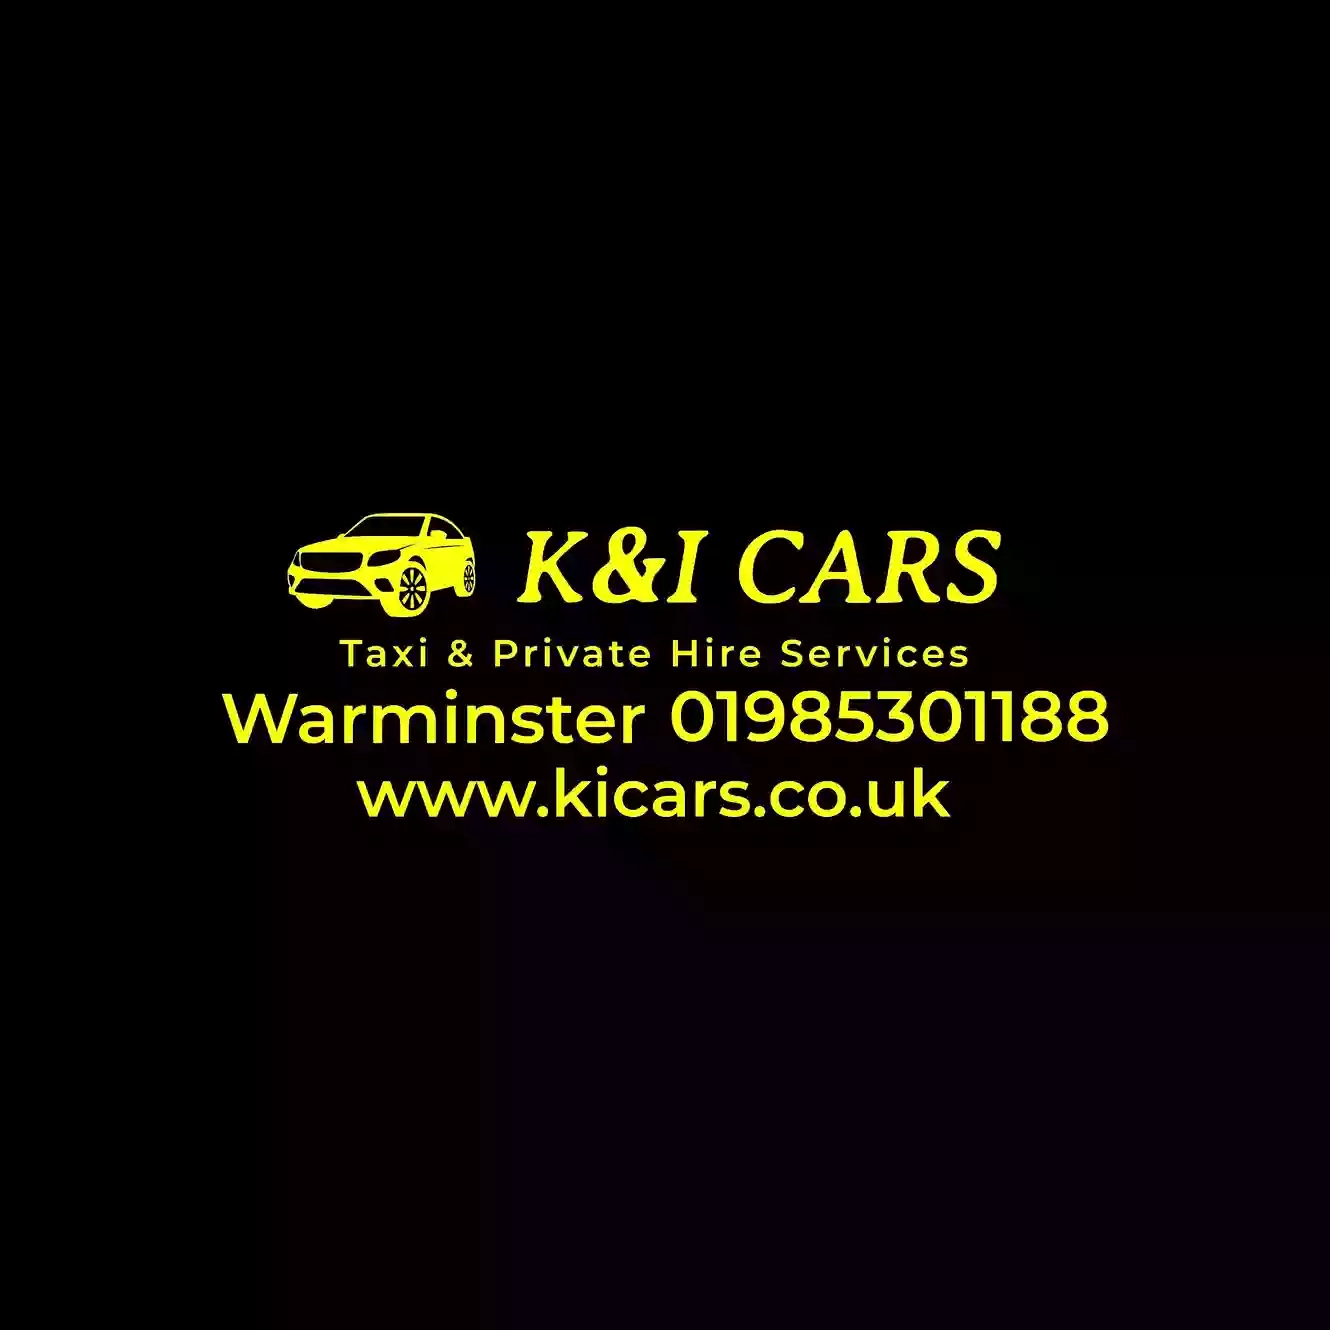 K&I Cars Taxi & Private Hire Service